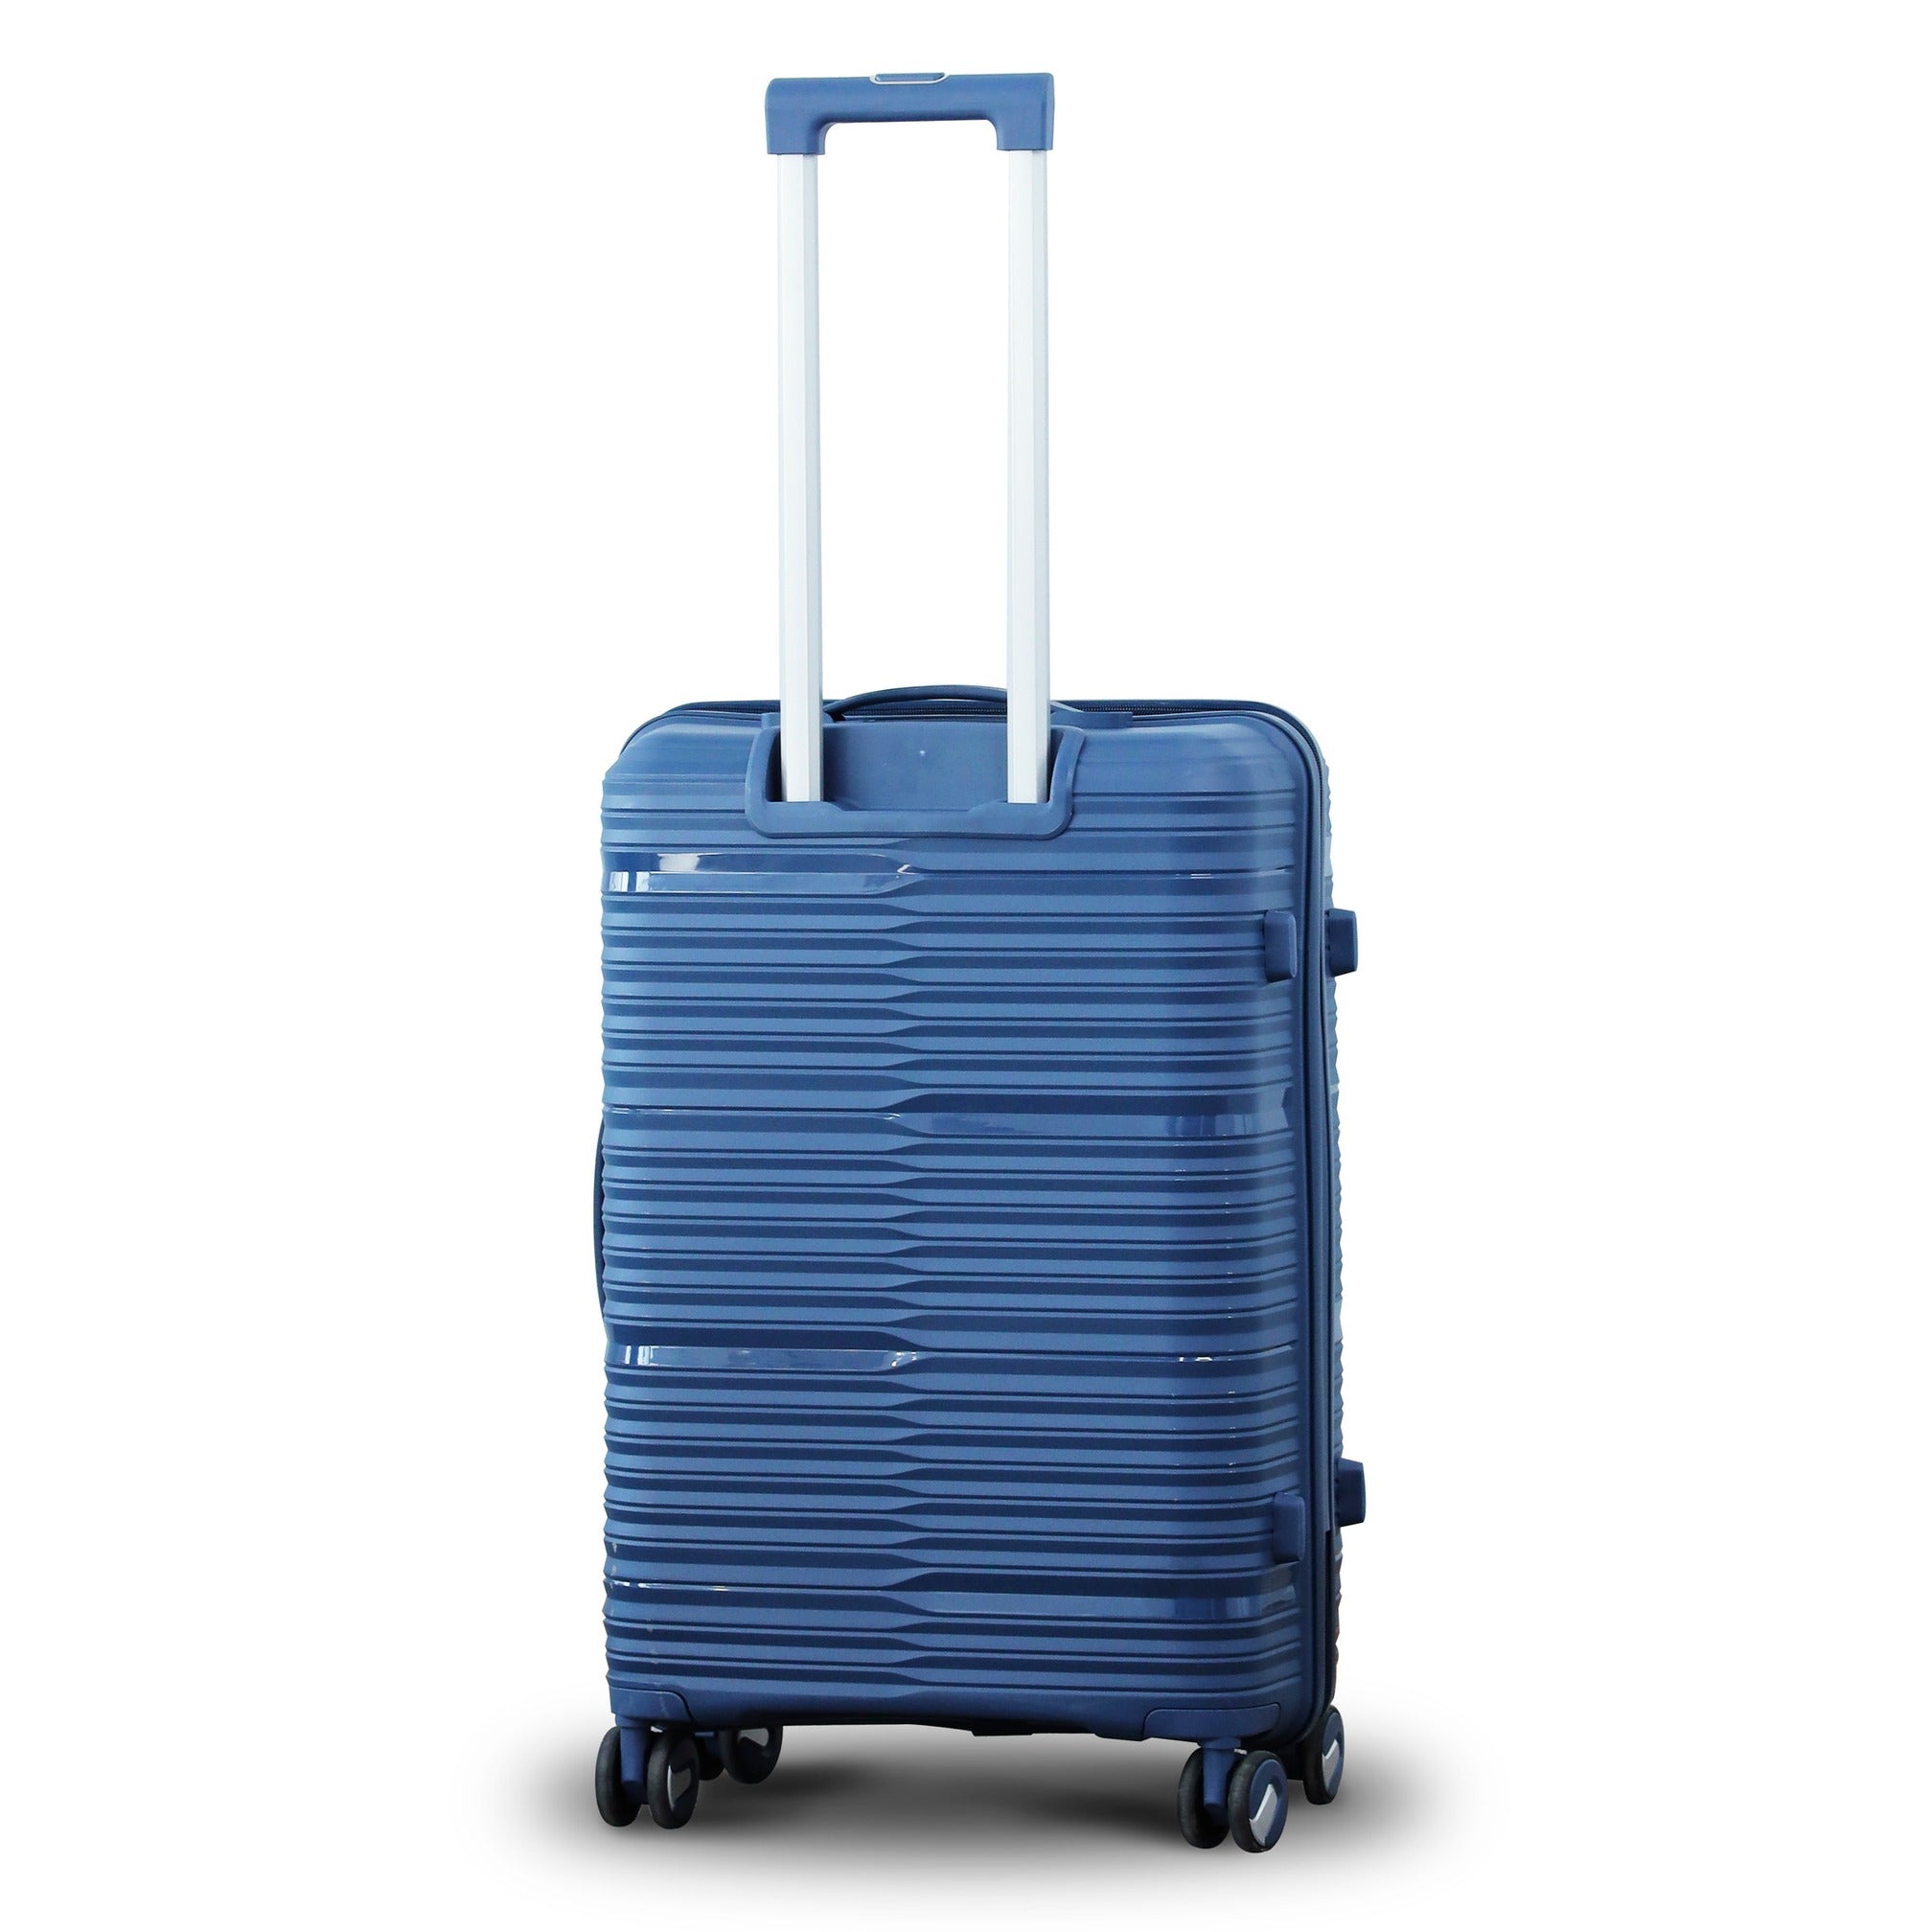 Buy 1 Get 1 Free | Medium Size PP Unbreakable Luggage Bags | 24" Size 20-25 Kg Capacity